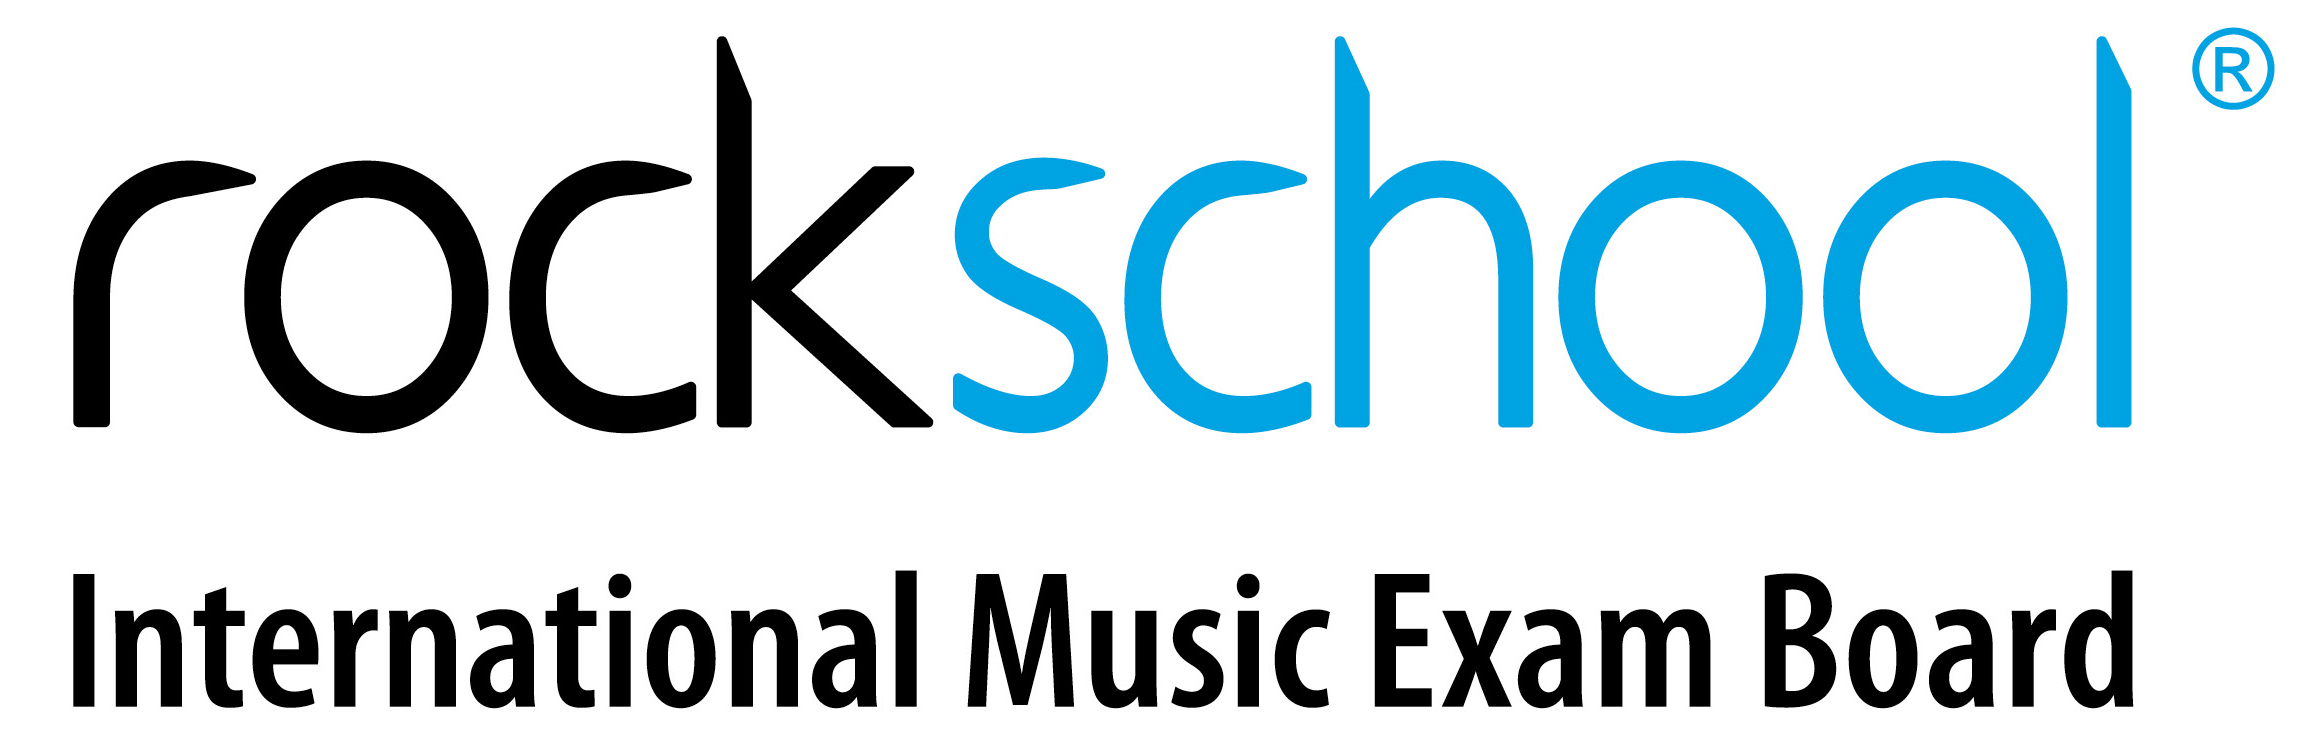 Rockschool logo